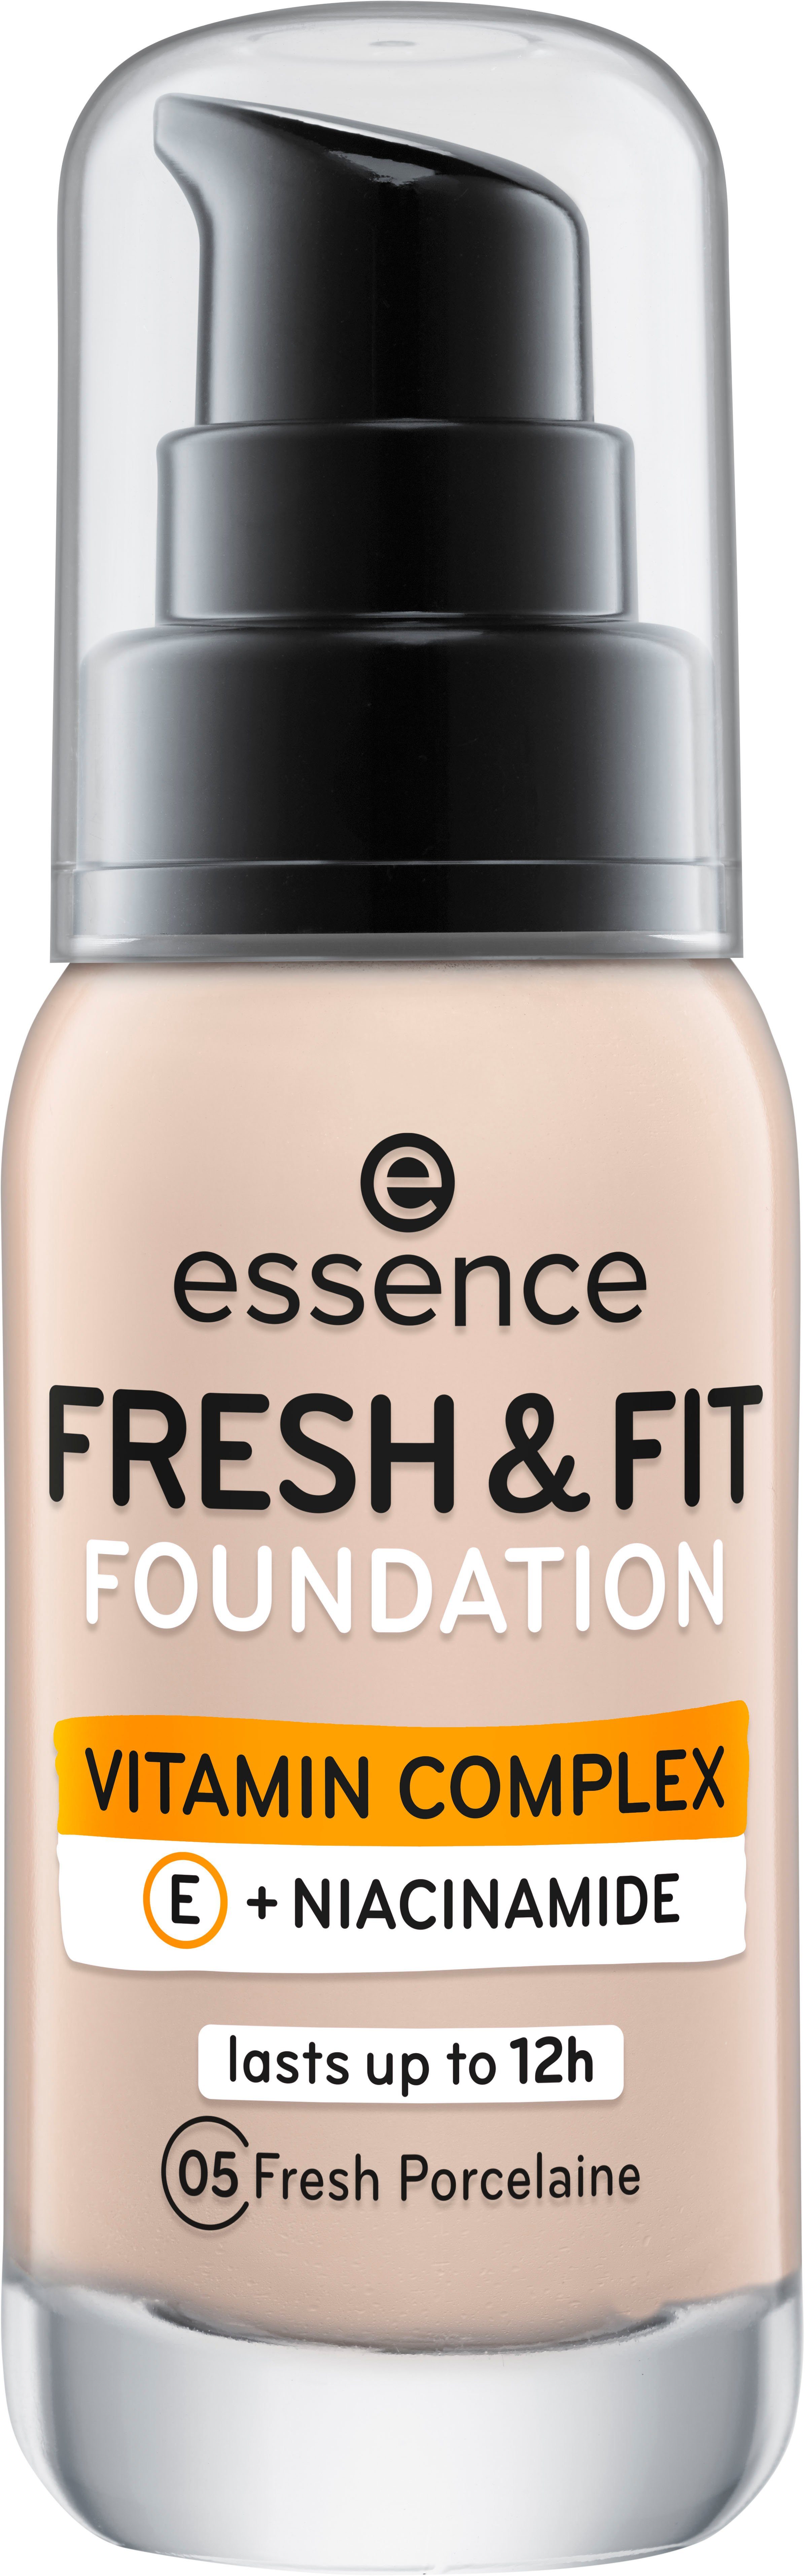 Essence Foundation FRESH & FIT FOUNDATION, 3-tlg. porcelaine fresh